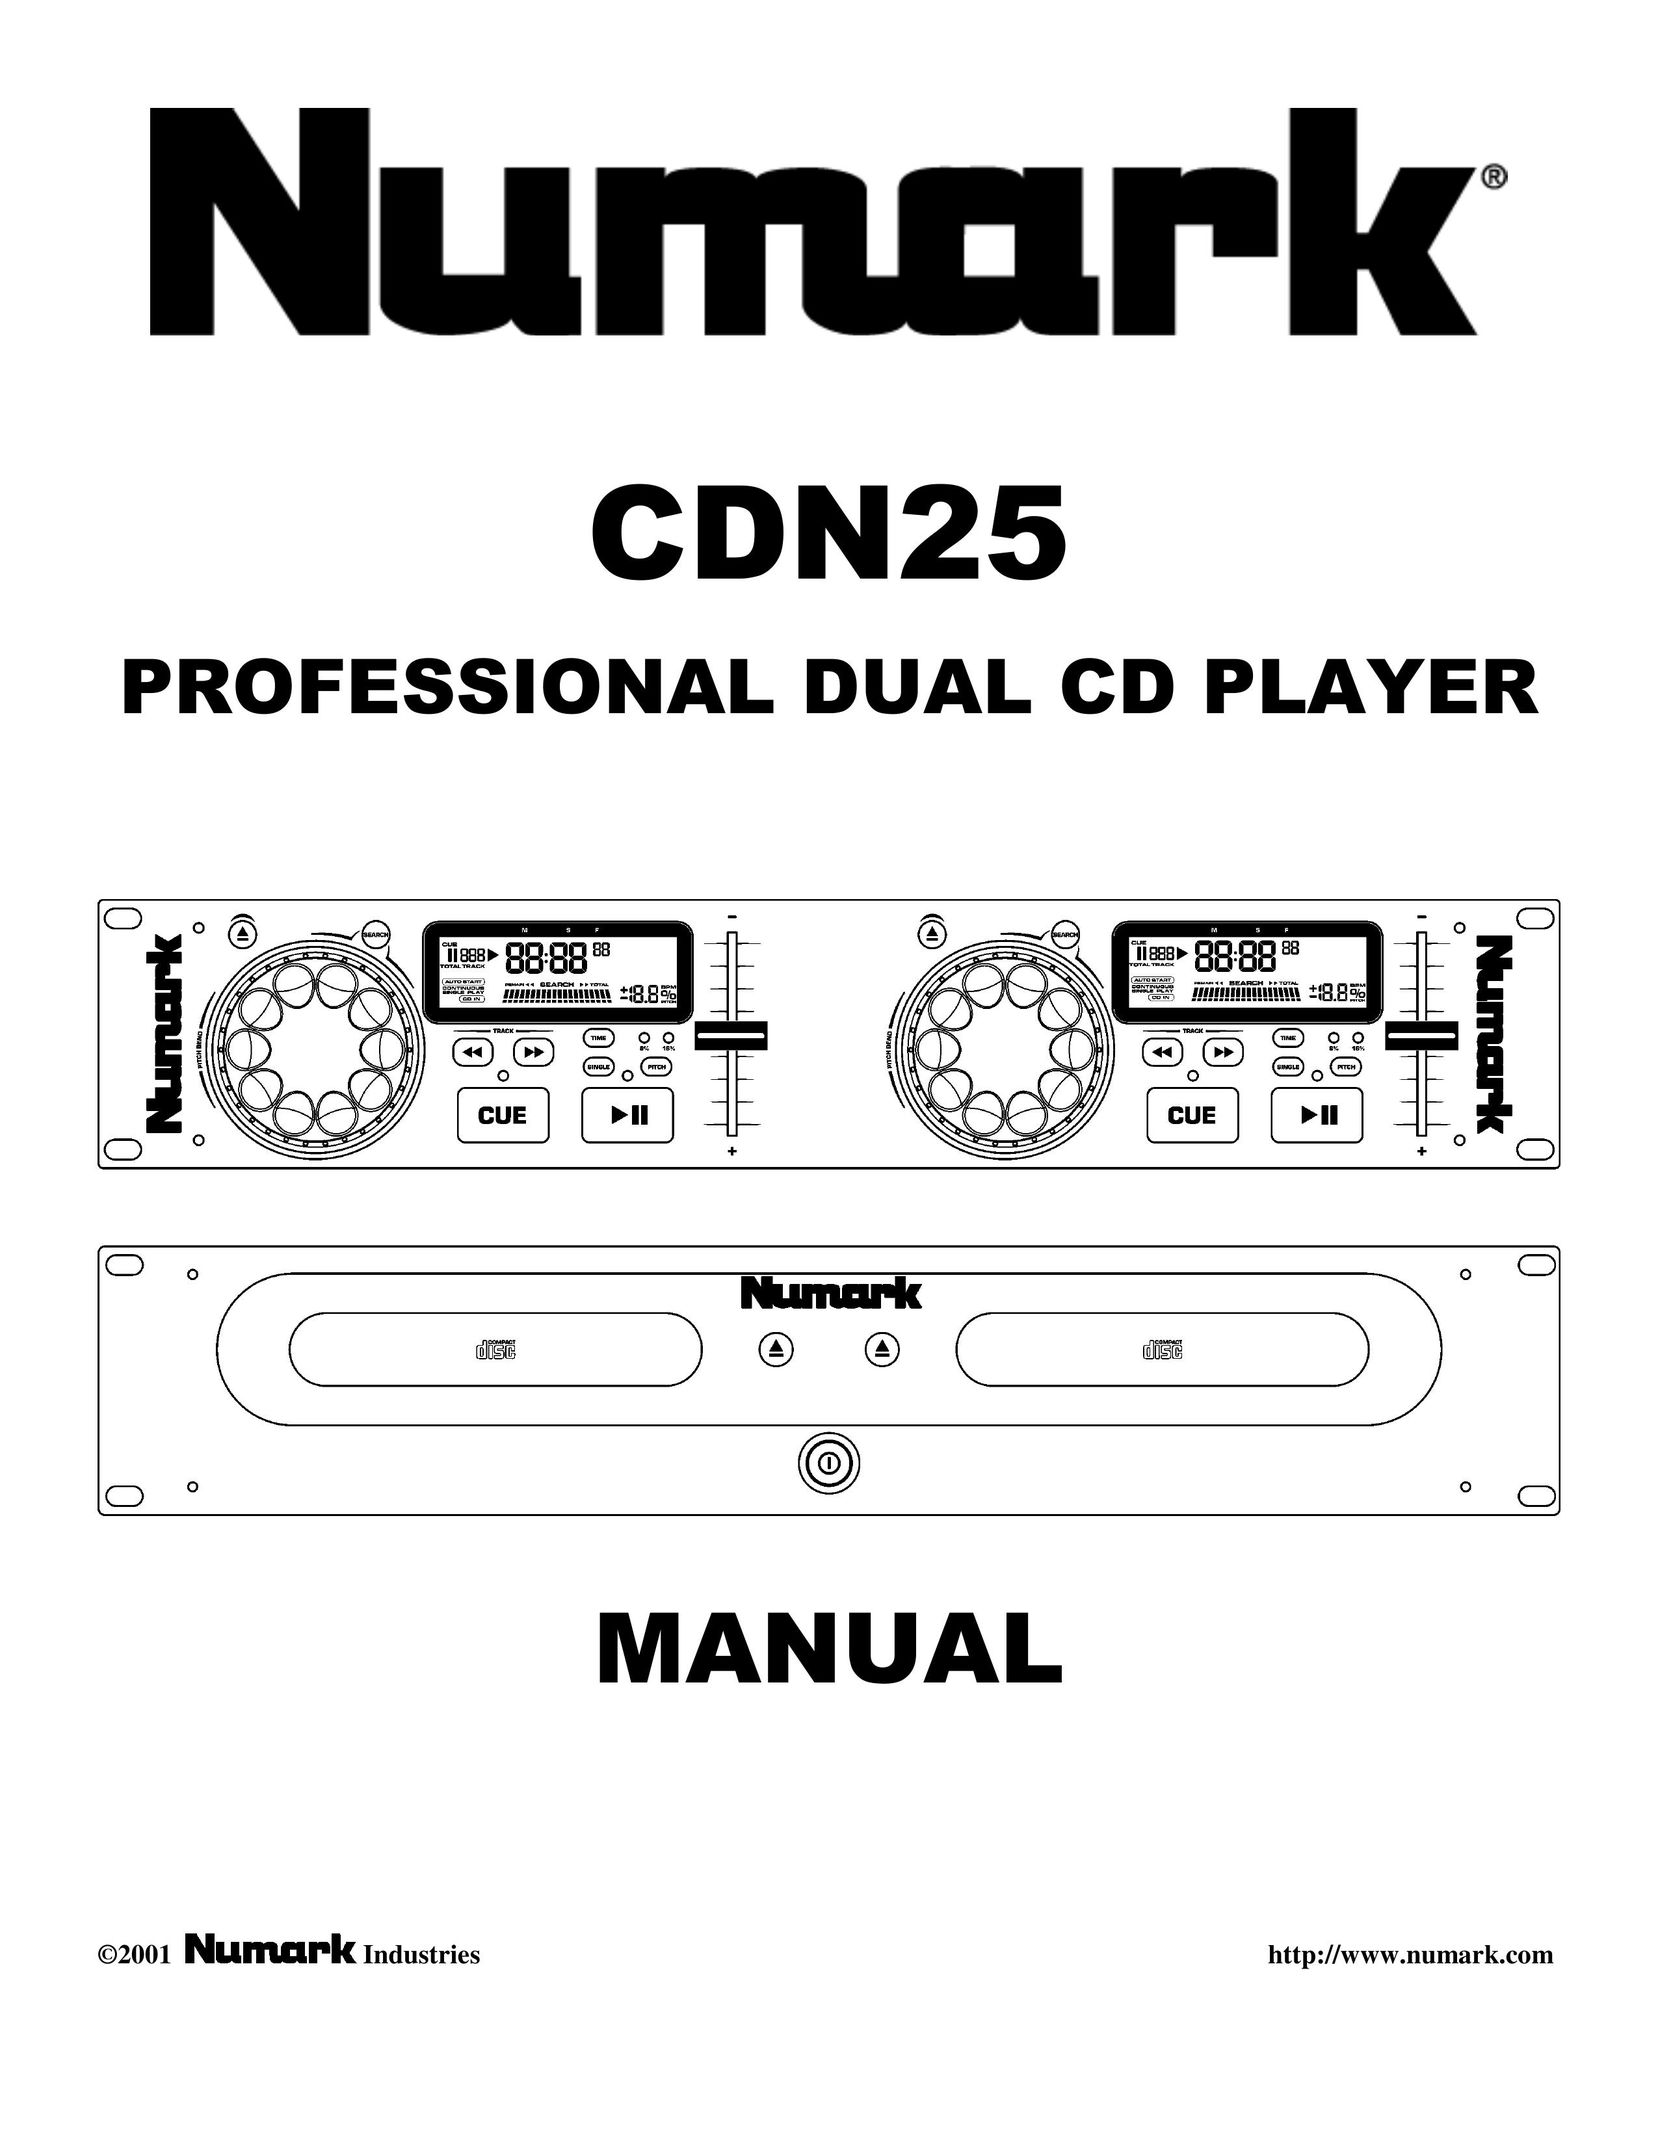 Numark Industries CDN25 CD Player User Manual